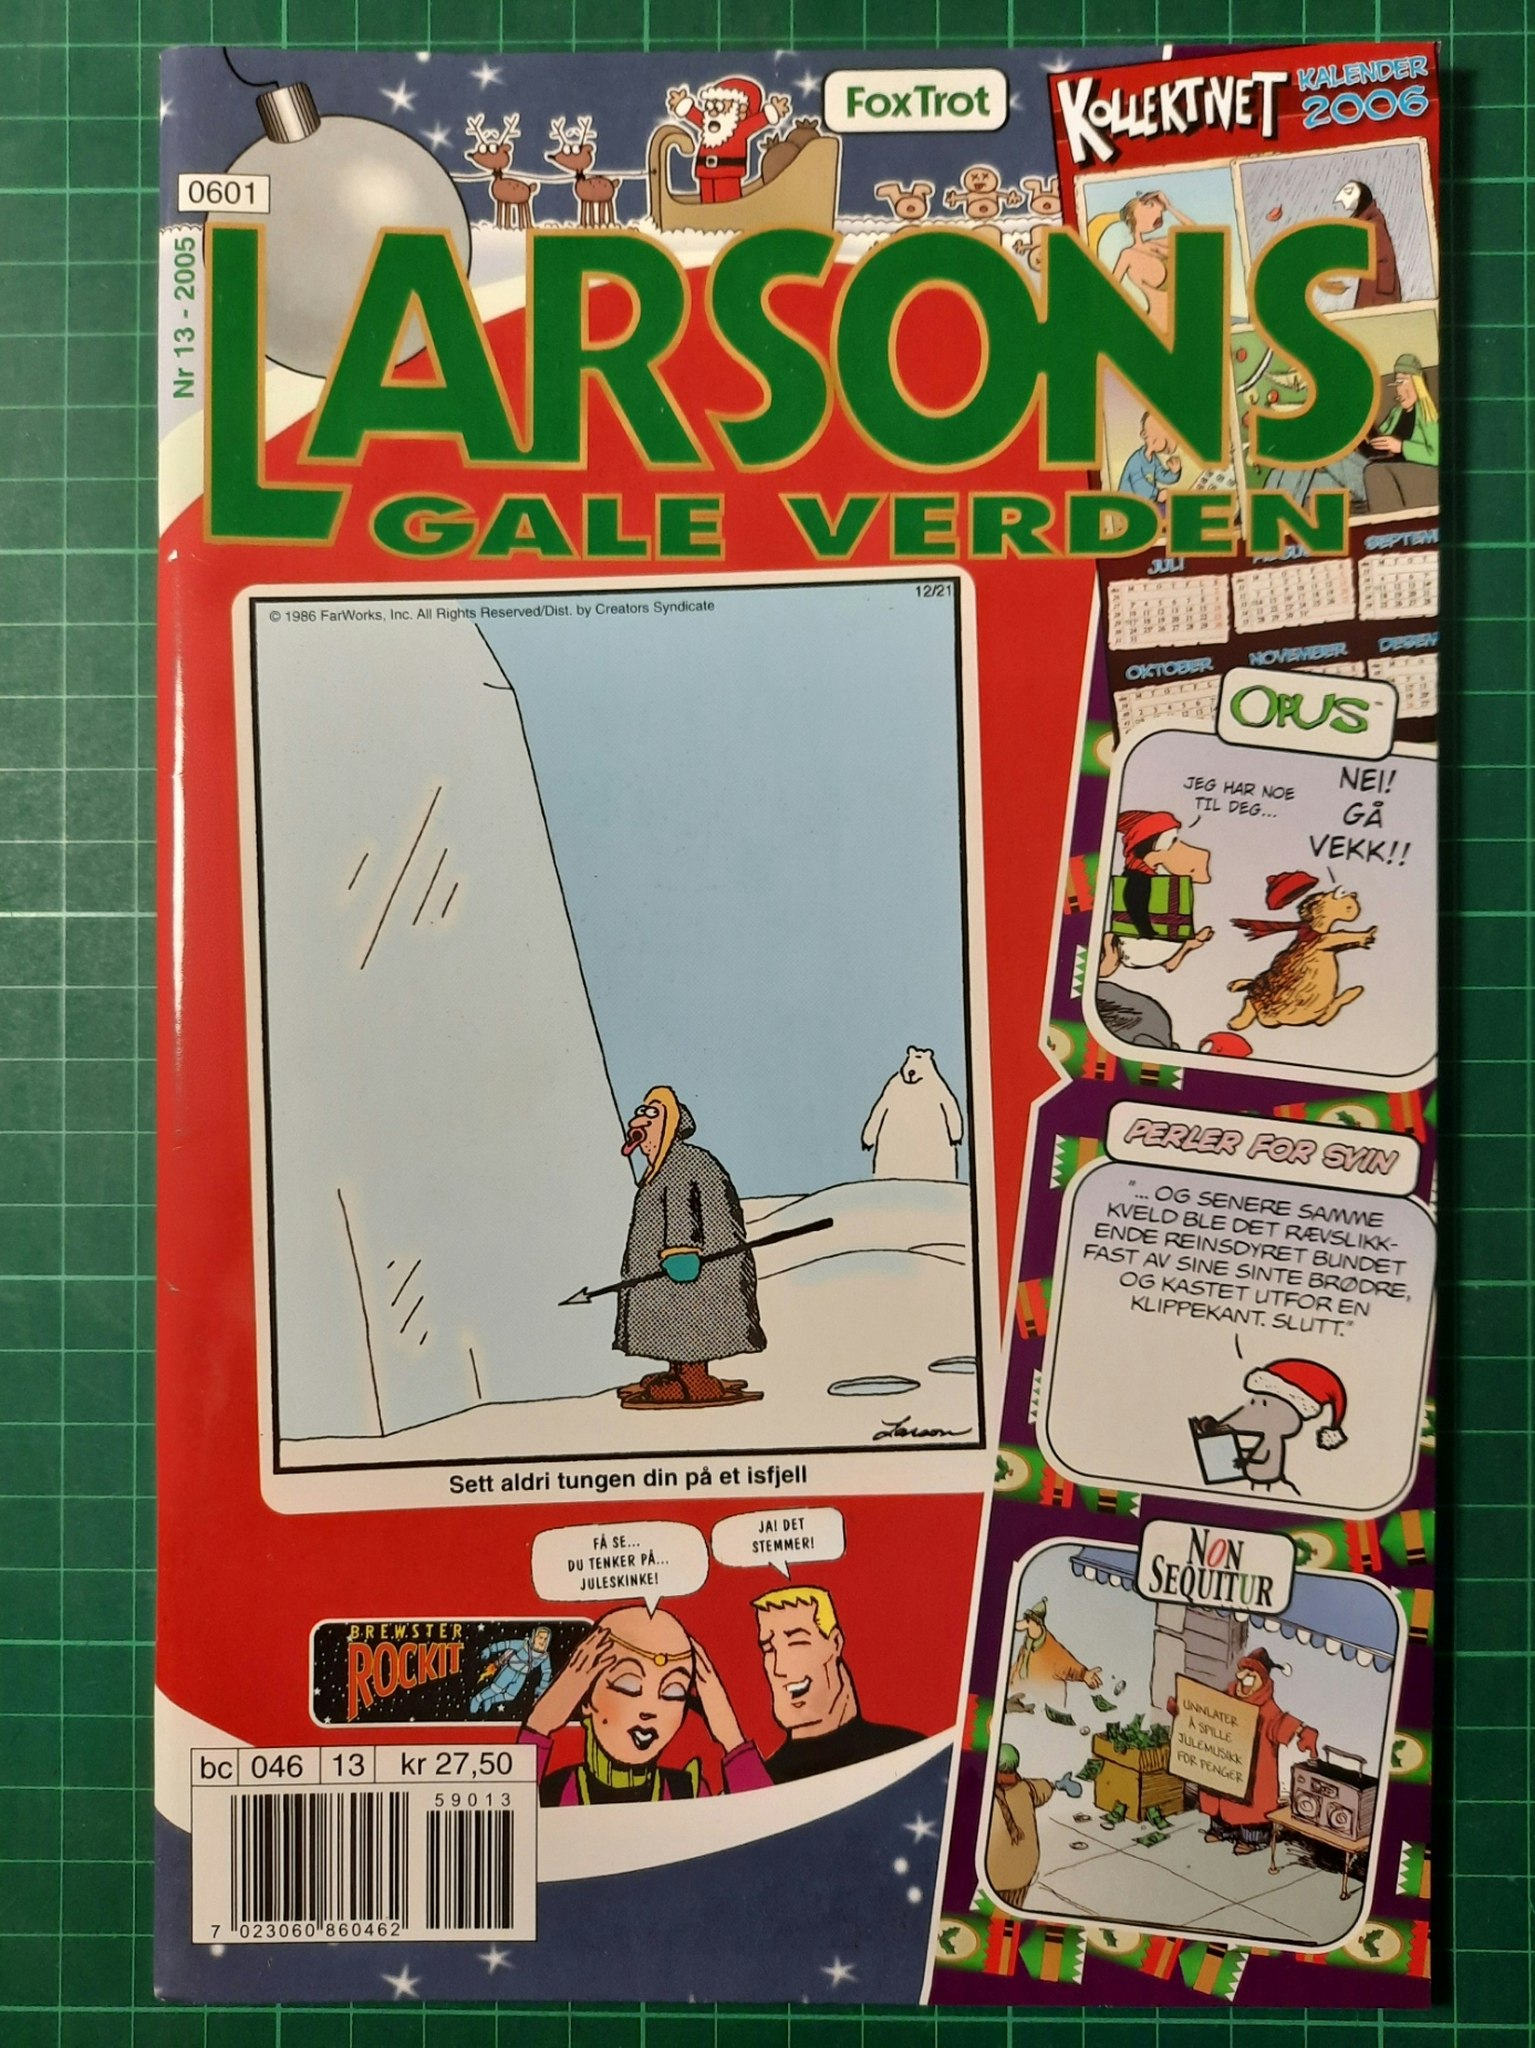 Larsons gale verden 2005 - 13